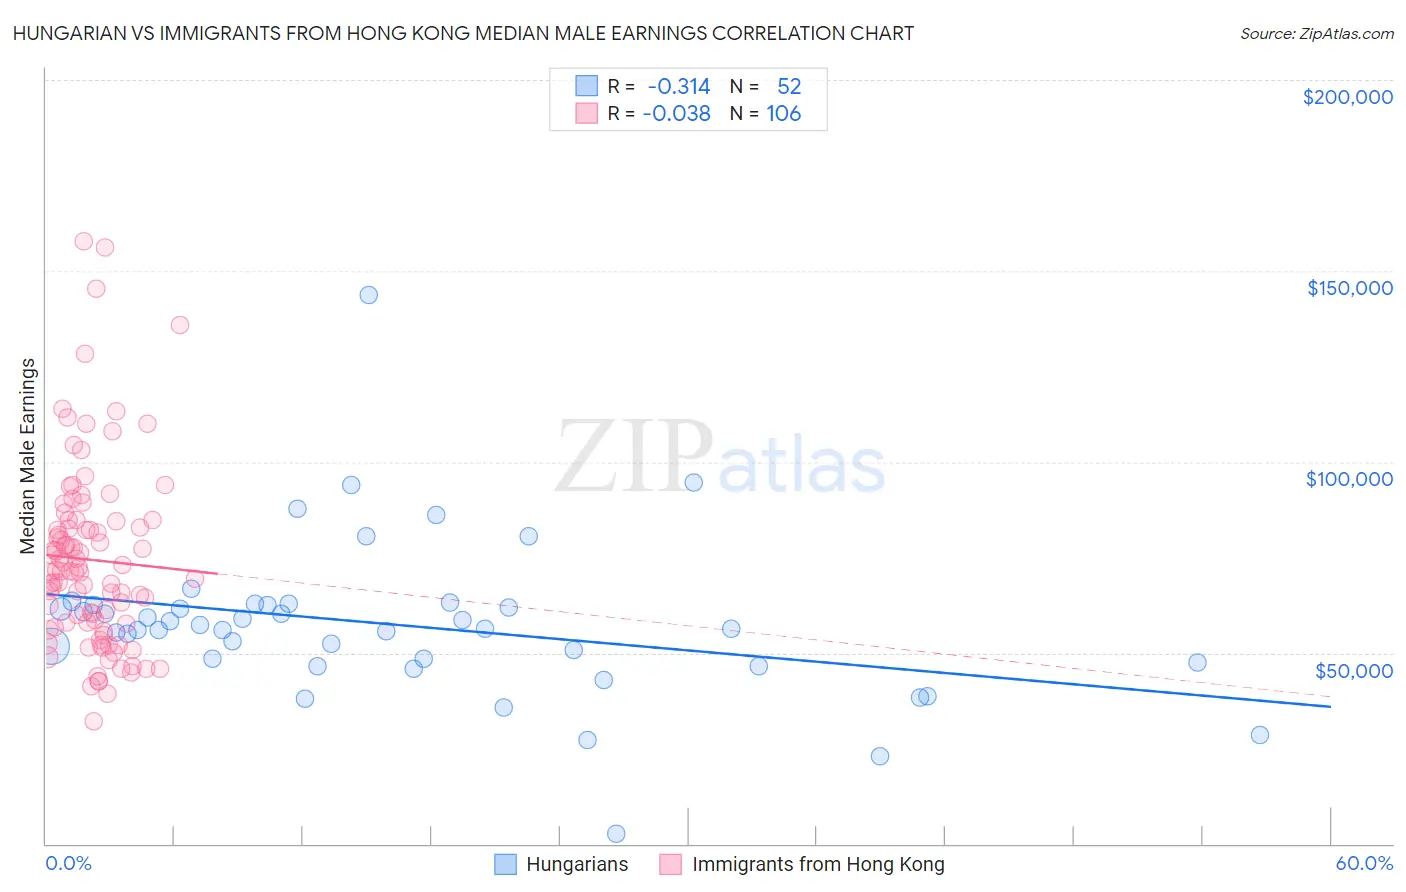 Hungarian vs Immigrants from Hong Kong Median Male Earnings